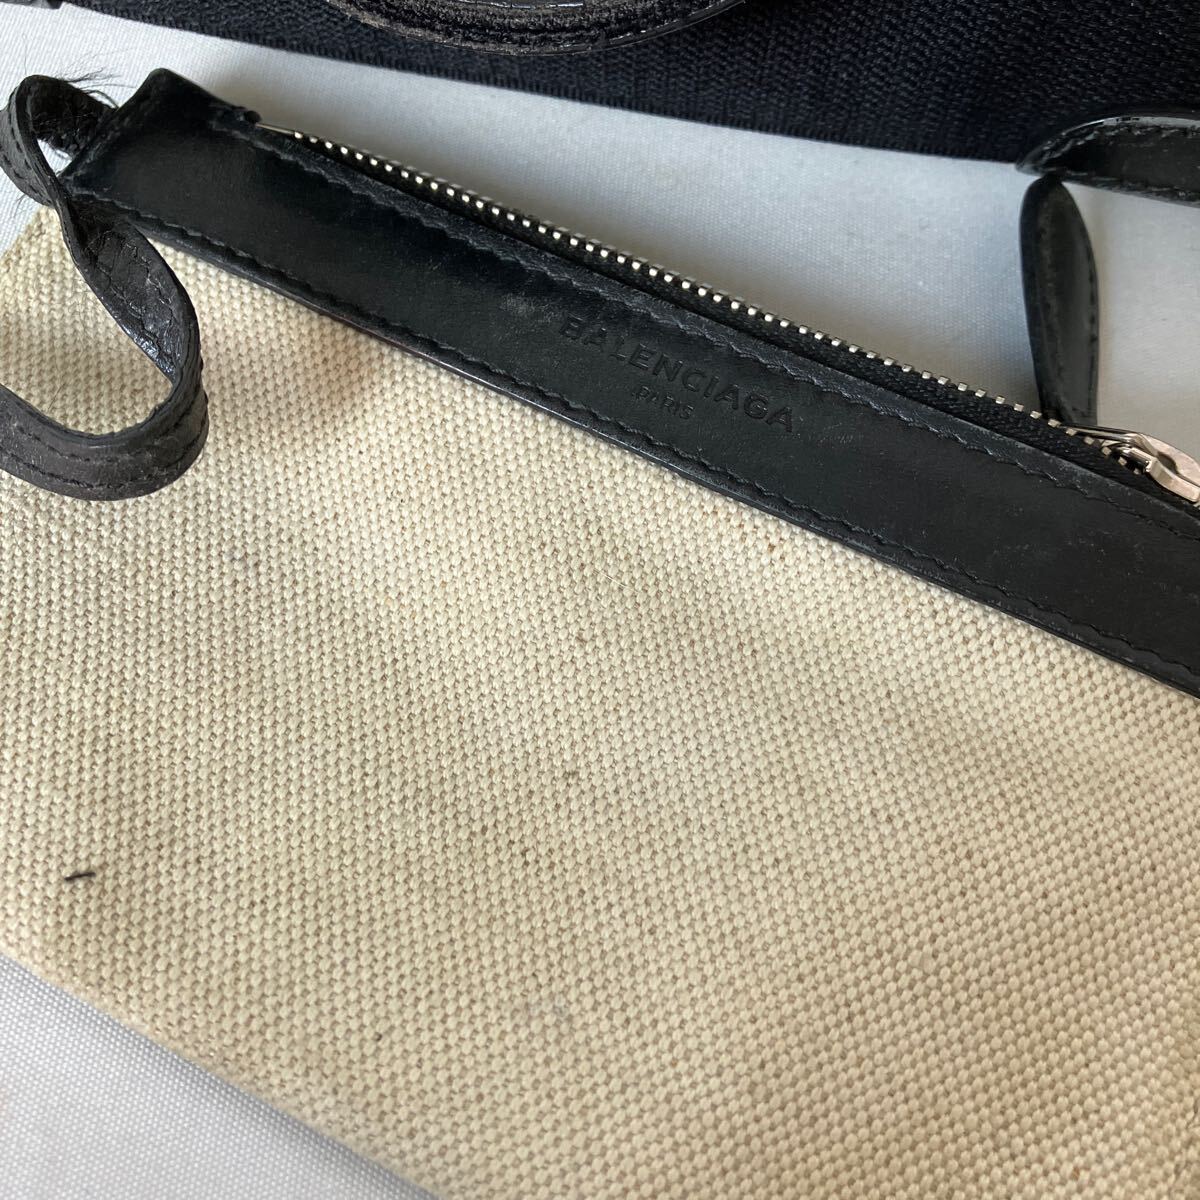 [500 иен старт ]BALENCIAGA Balenciaga большая сумка парусина ручная сумочка 